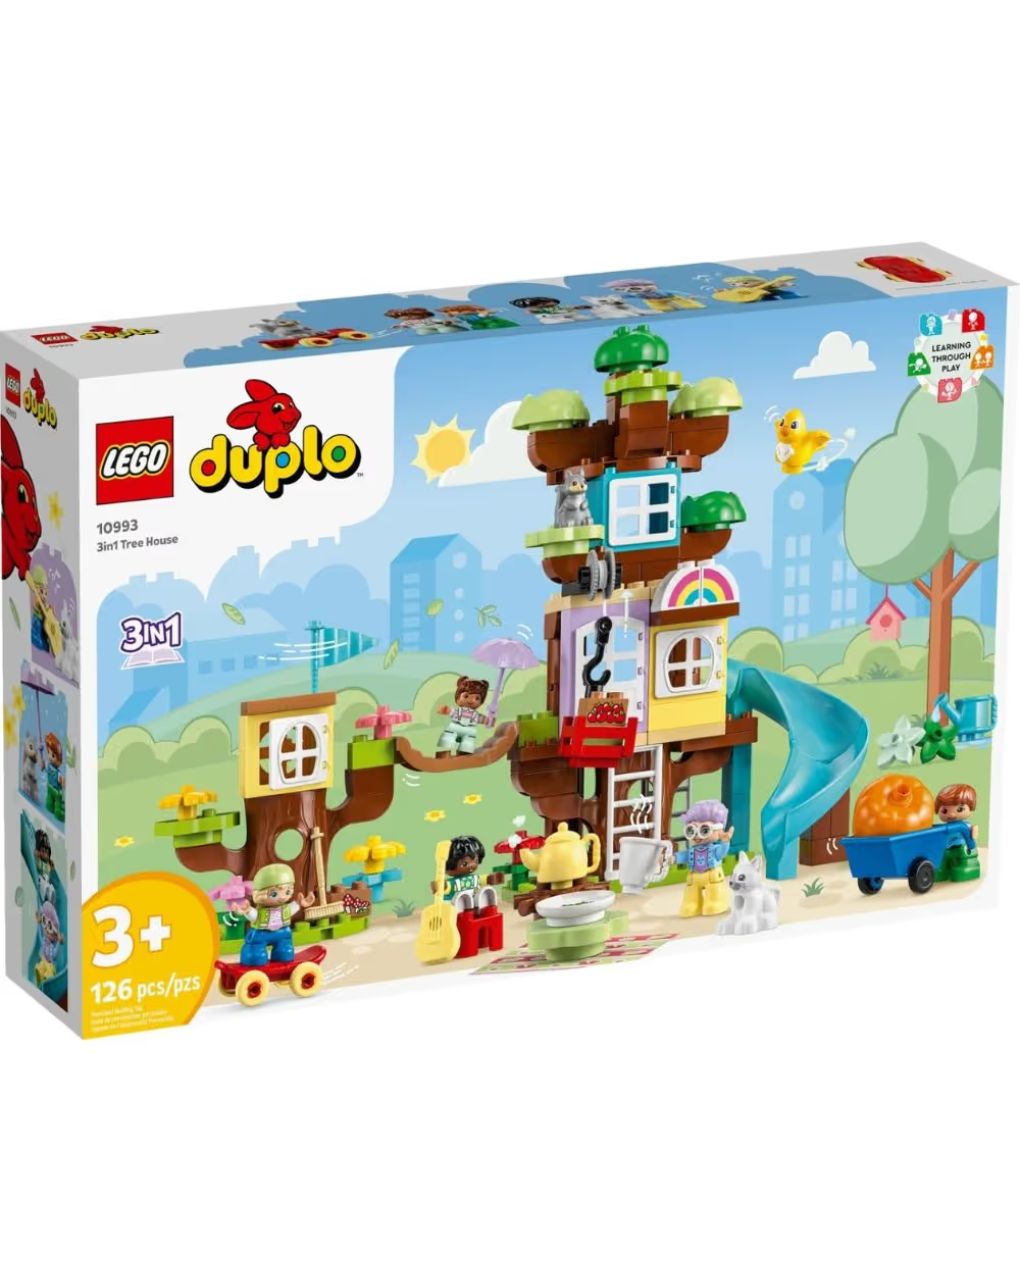 Lego duplo 3in1 tree house 10993 - Lego